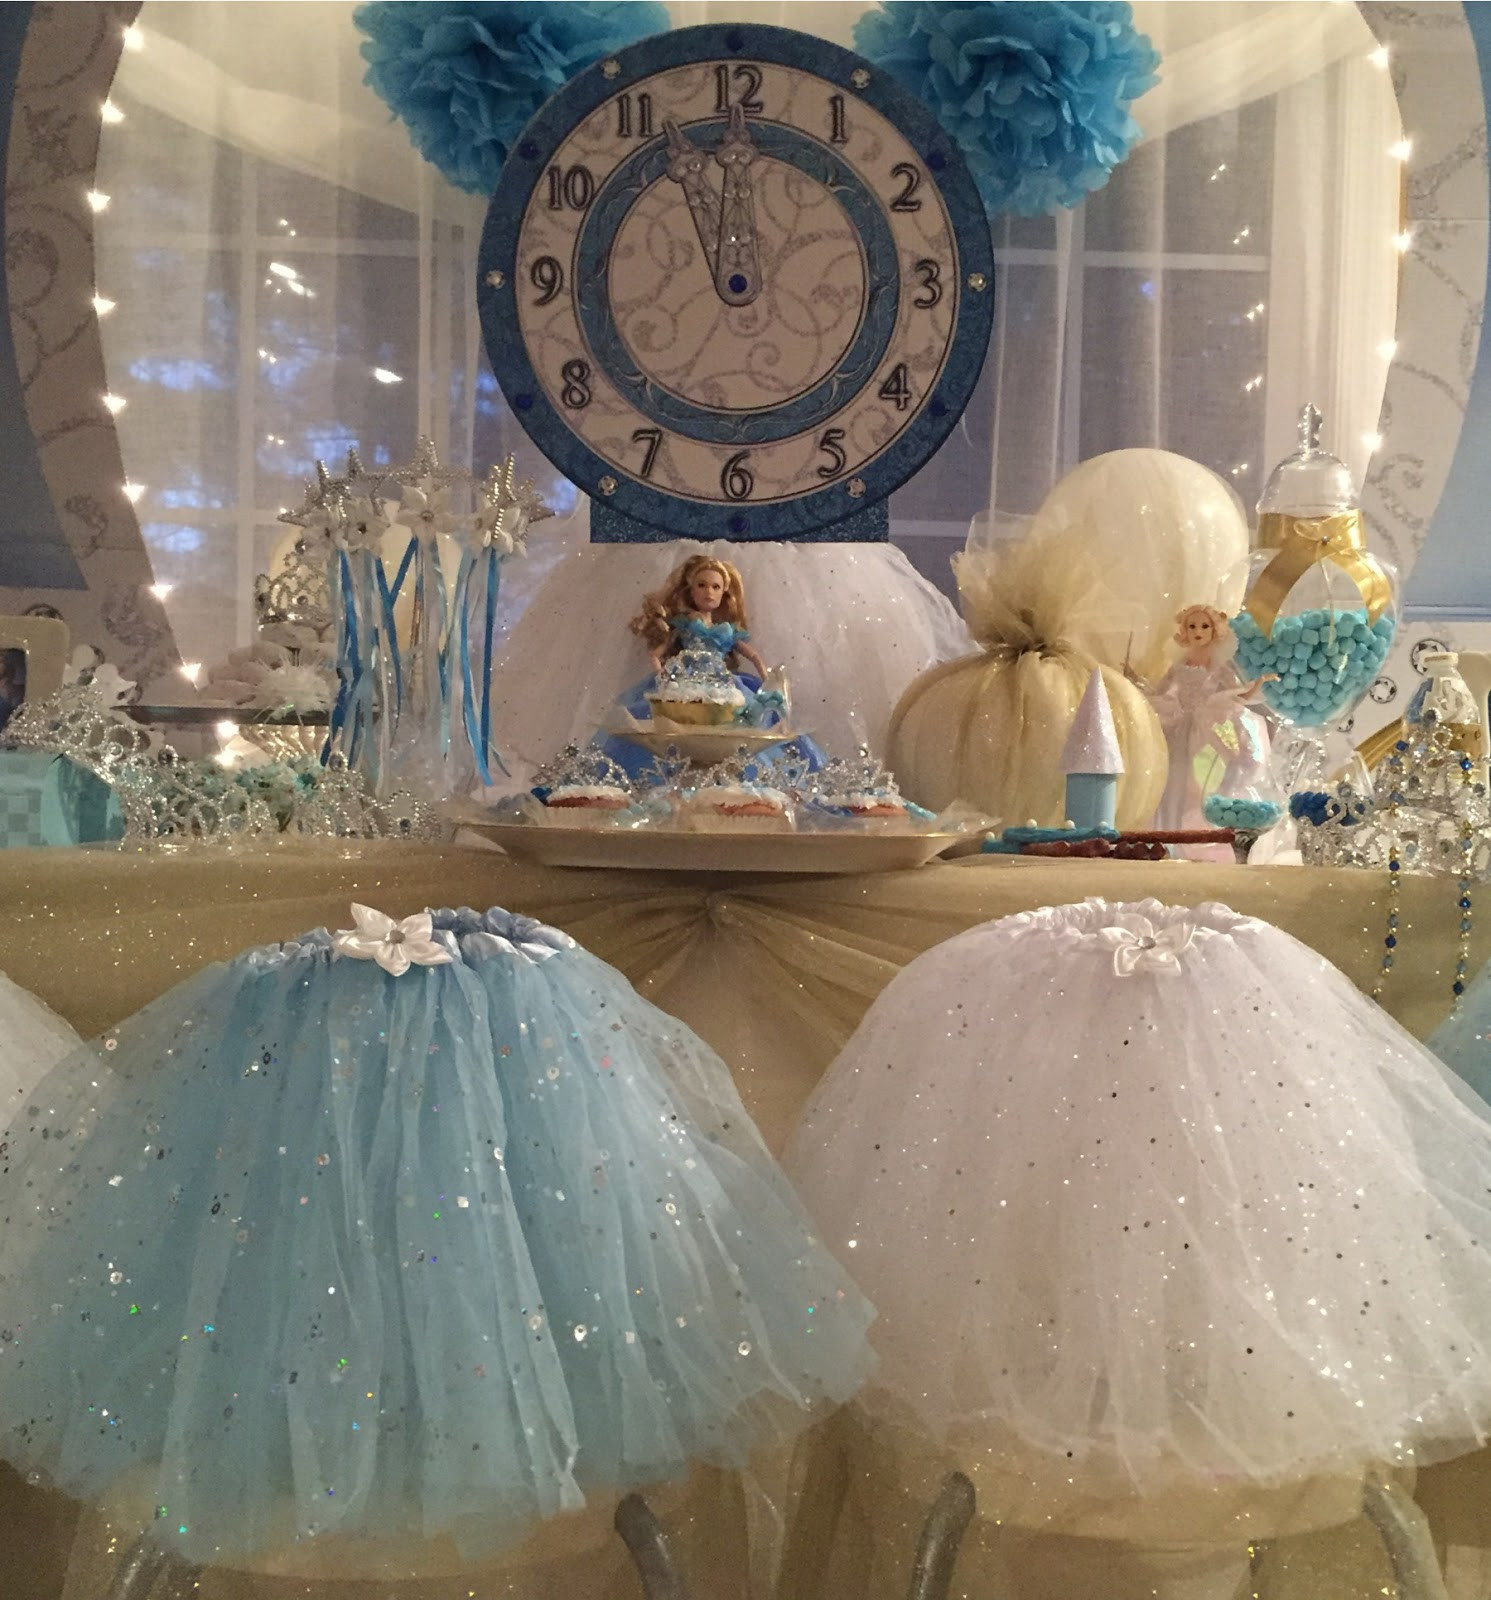 Cinderella Birthday Decorations
 The Princess Birthday Blog Cinderella Party Giveaway